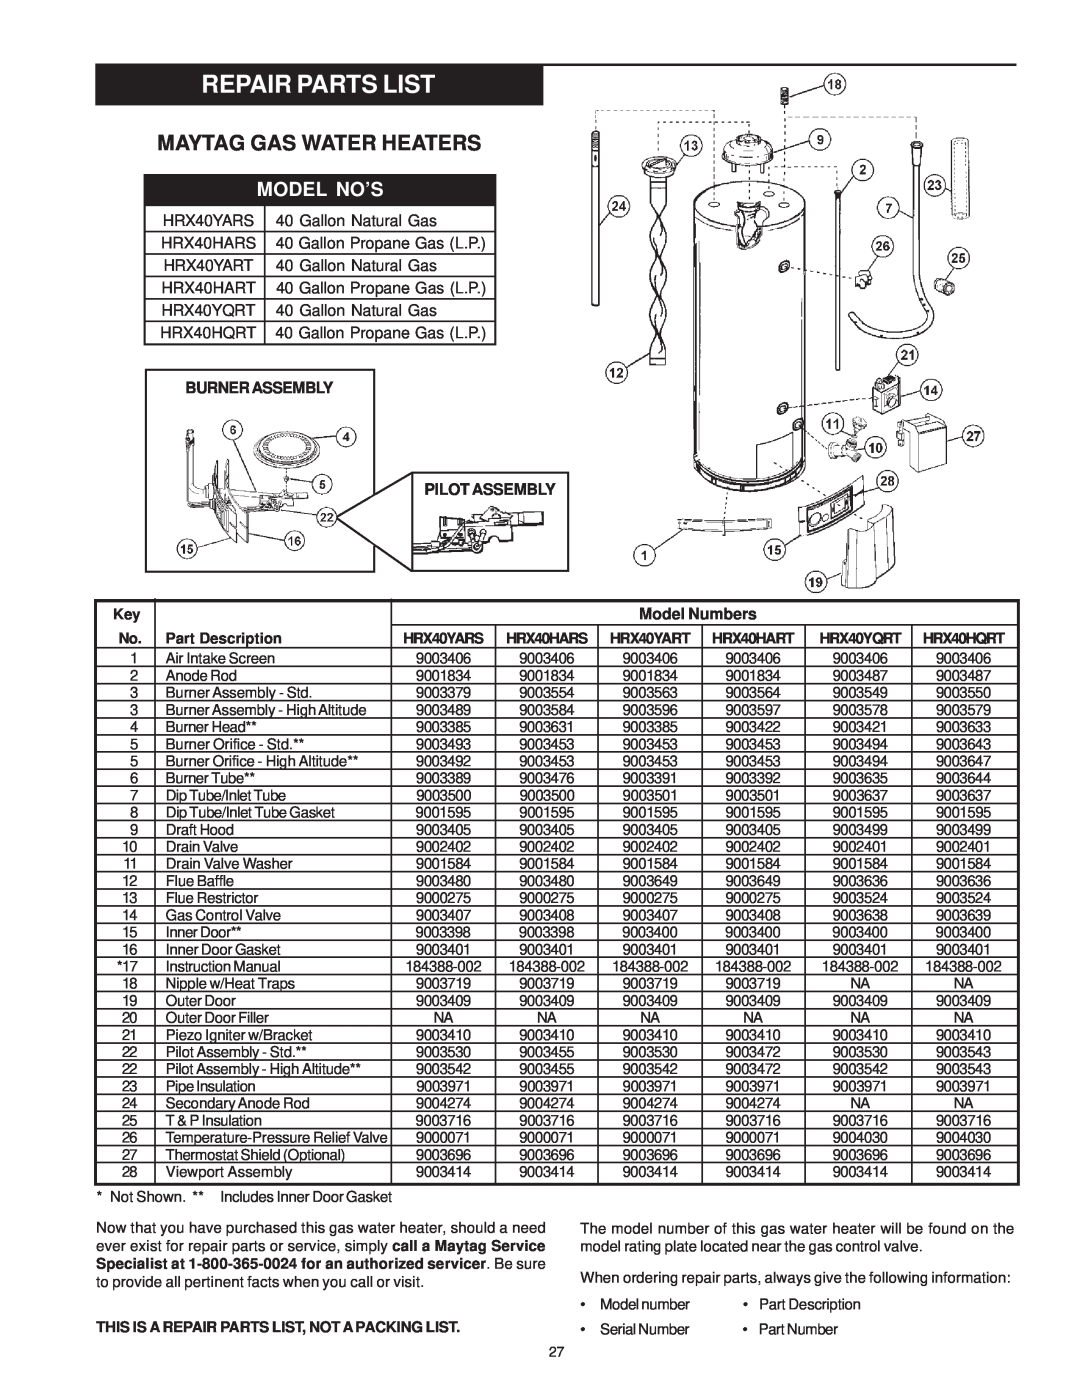 Maytag HRX40HQRT, HRX50YART, HRX40YQRT, HRX40HART, HRX40YARS manual Repair Parts List, Maytag Gas Water Heaters, Model No’S 